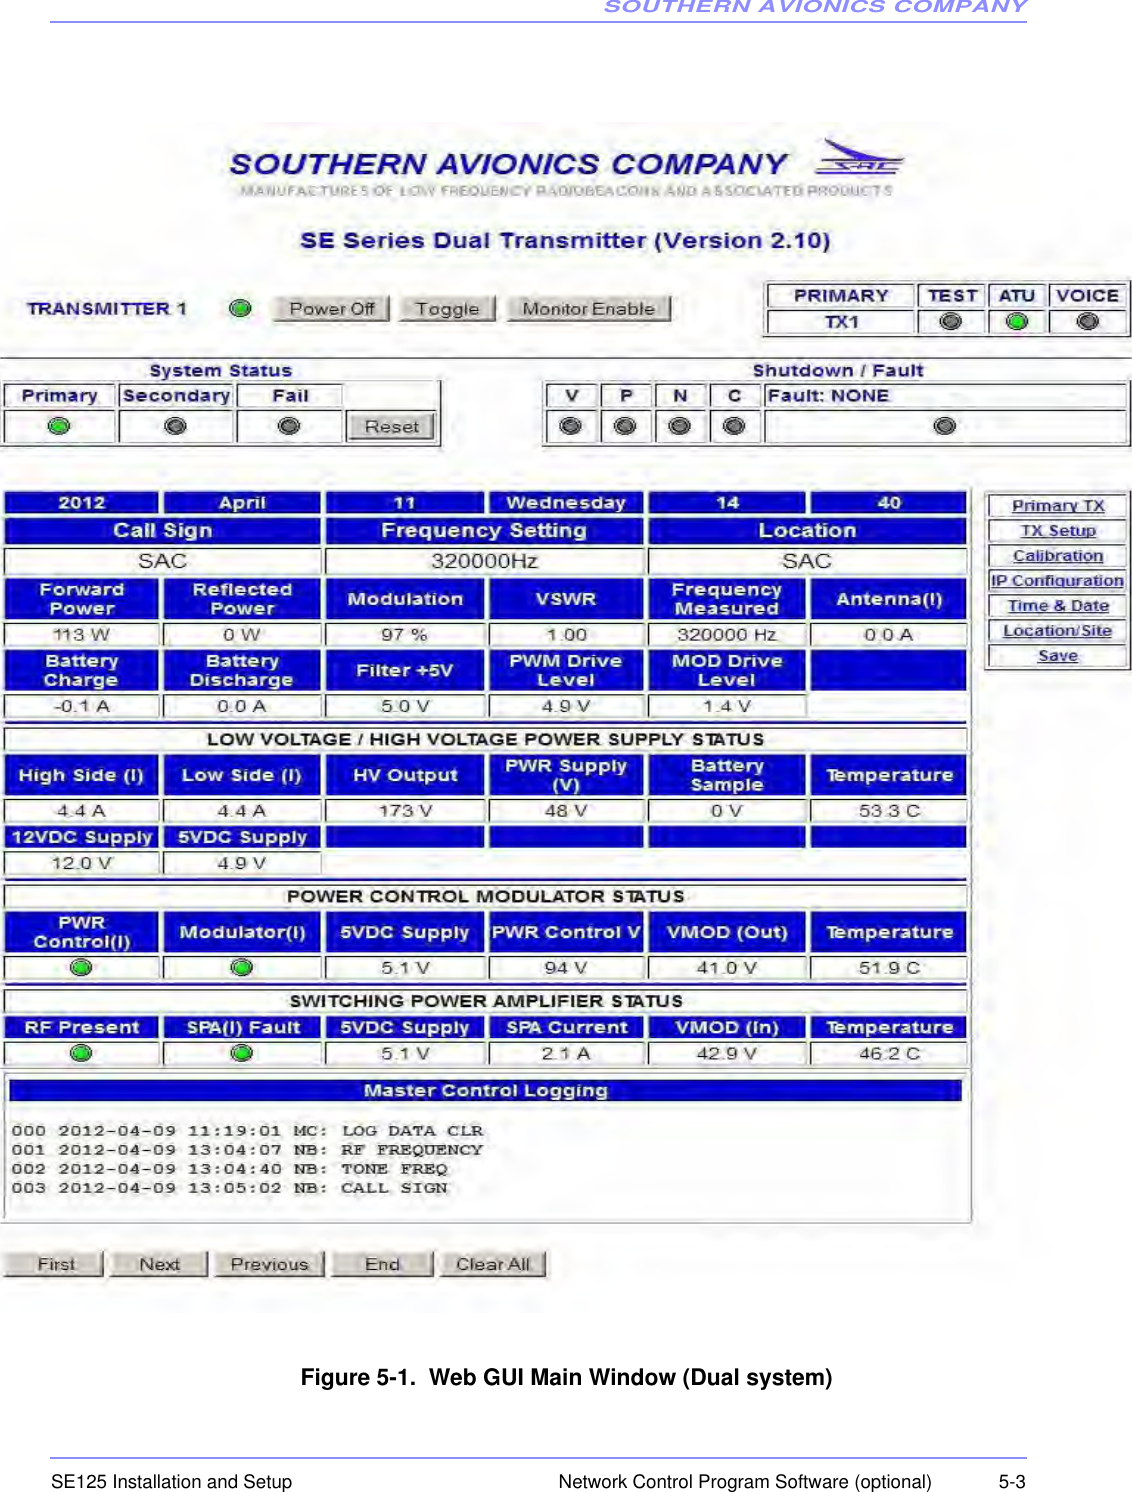 SOUTHERN AVIONICS COMPANYSE125 Installation and Setup  5-3Network Control Program Software (optional)Figure 5-1.  Web GUI Main Window (Dual system)